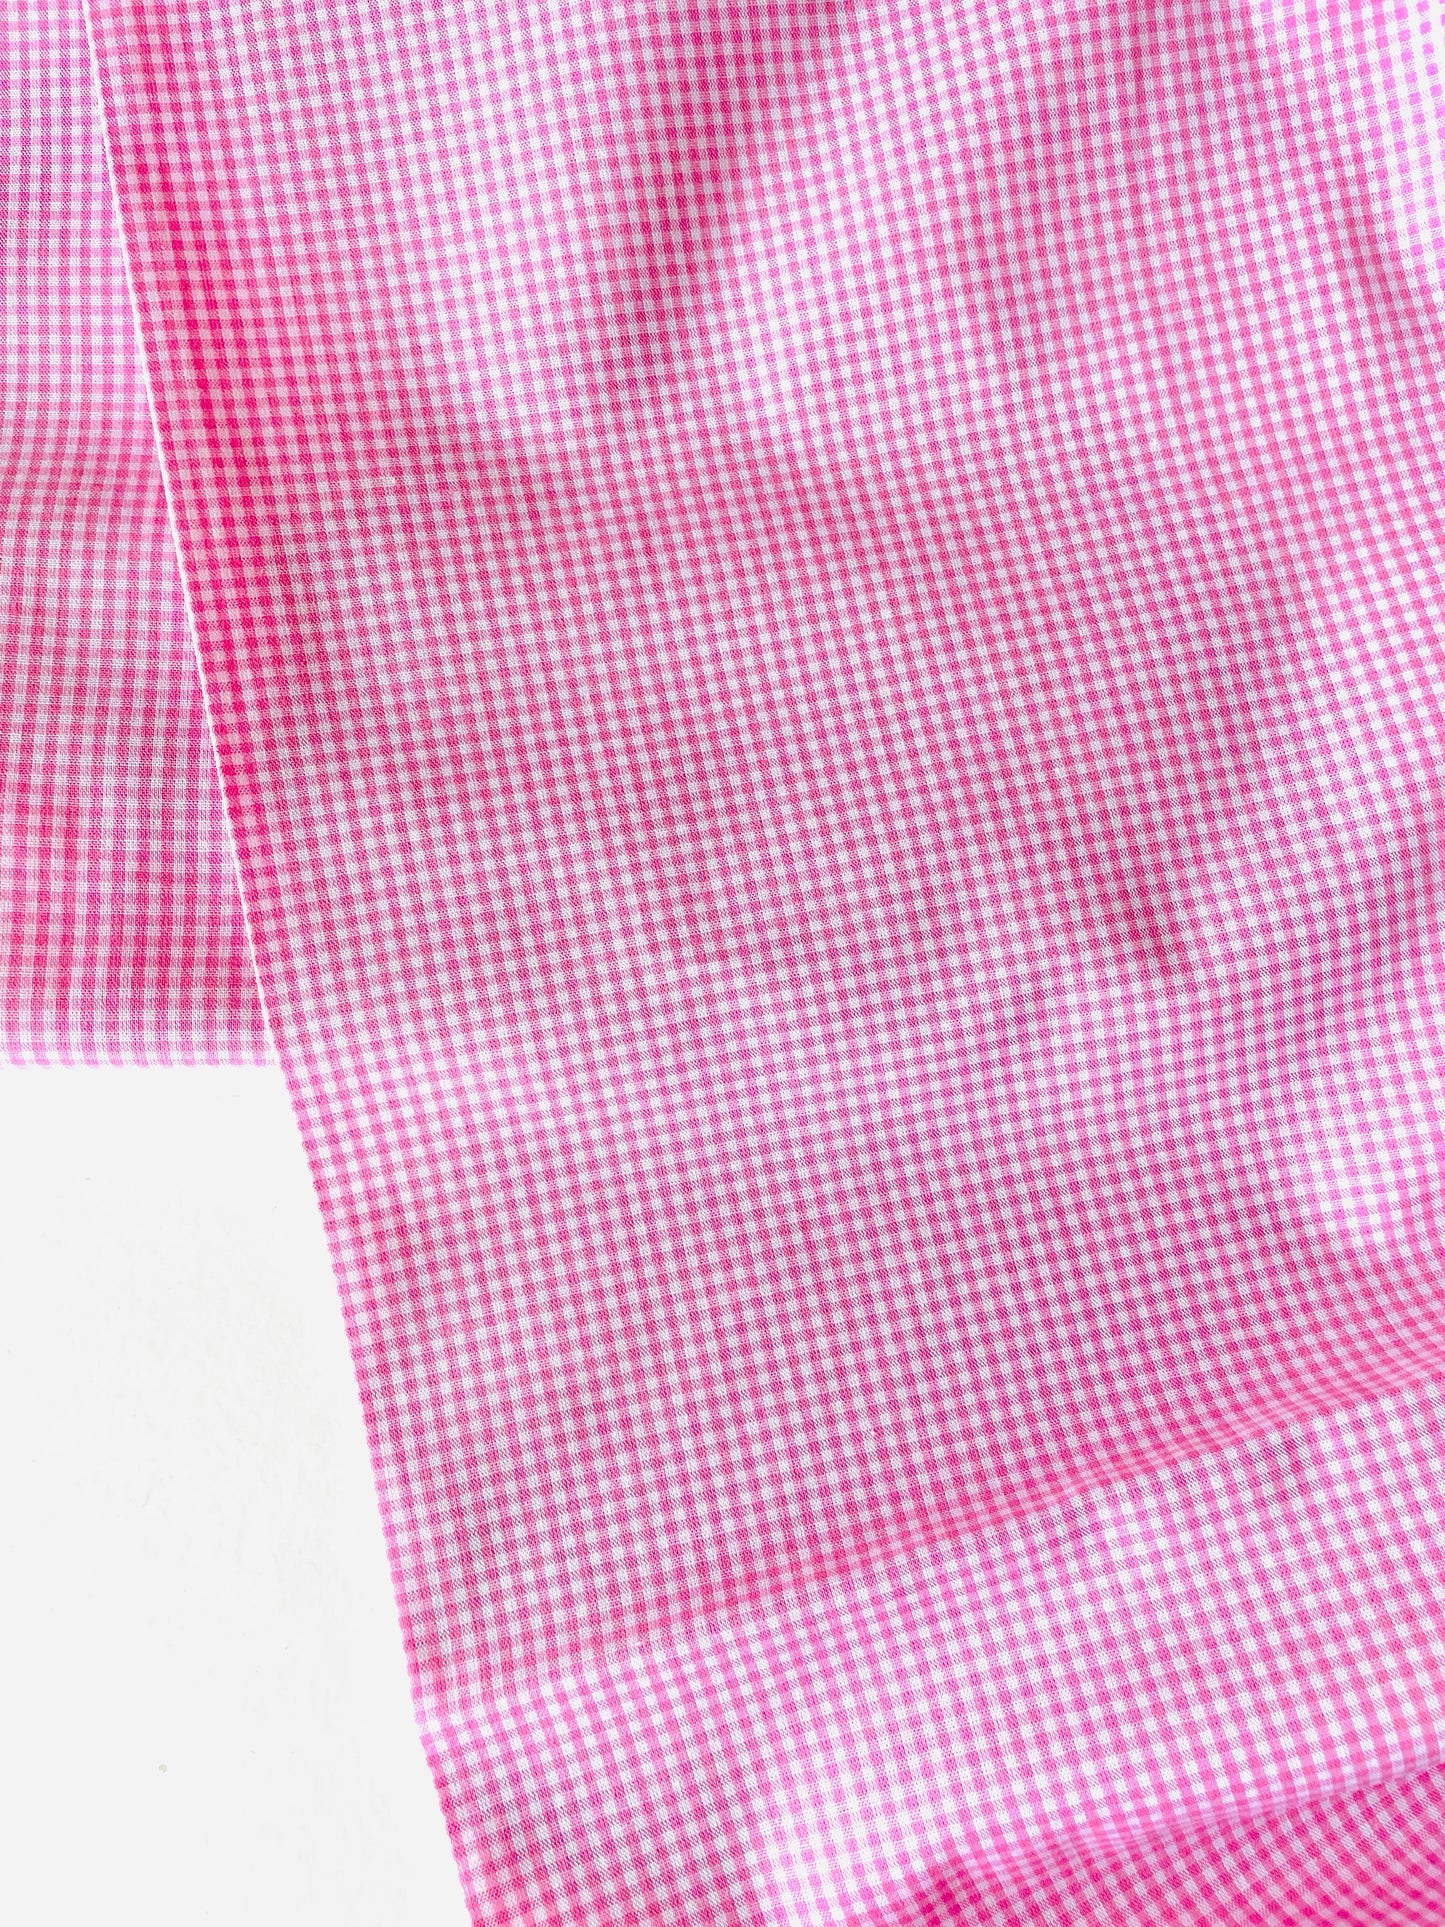 Mini Gingham - pink (2mm grid)